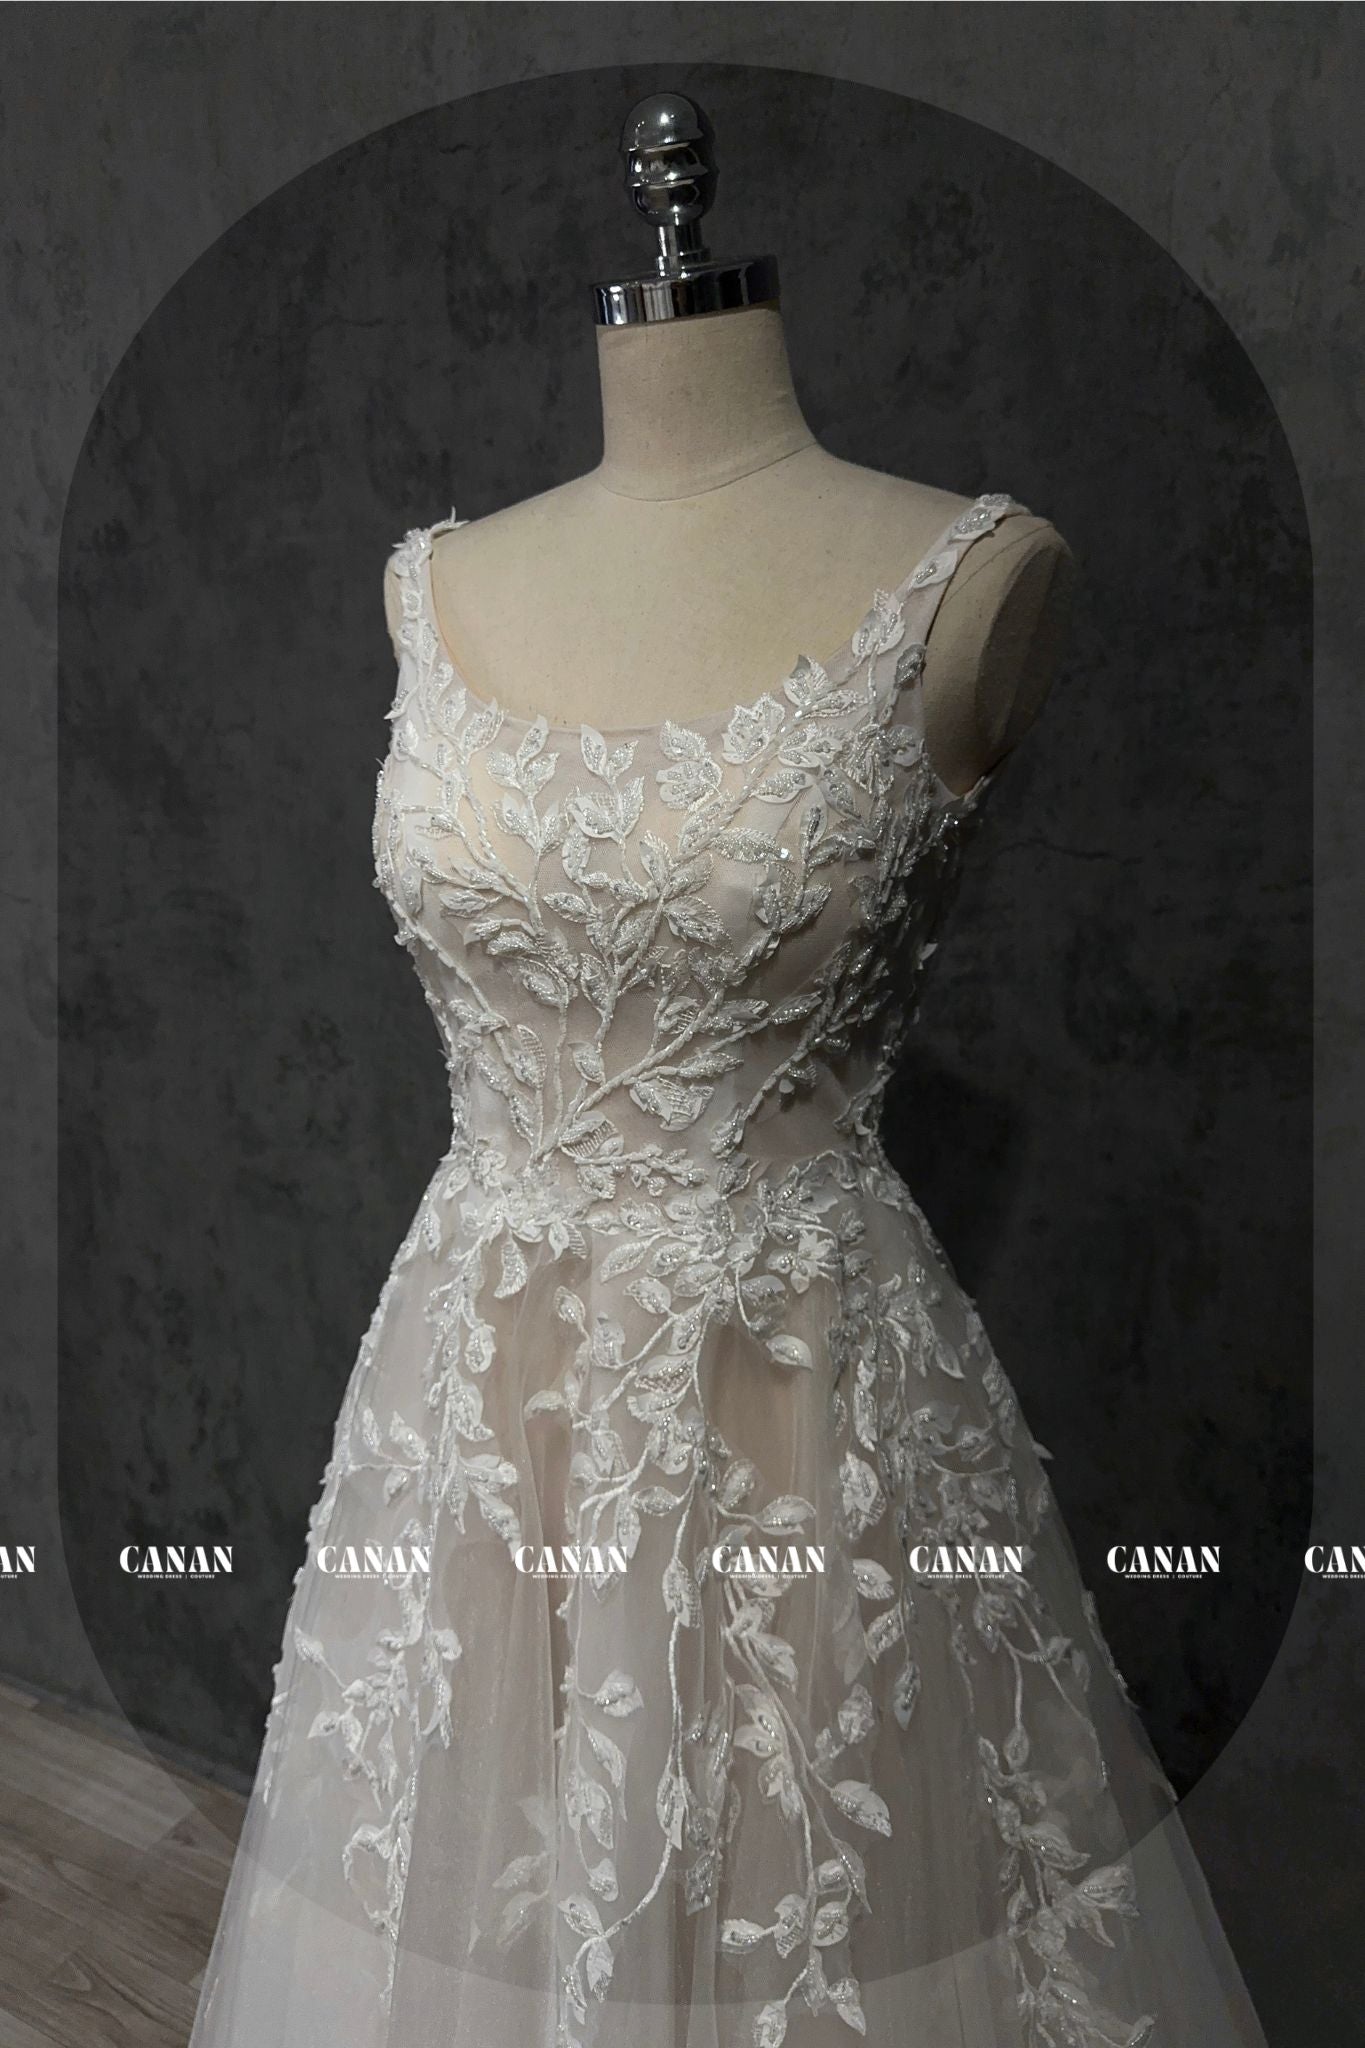 Elfleda - Floral Lace Wedding Dress: Square Neck Corset Style